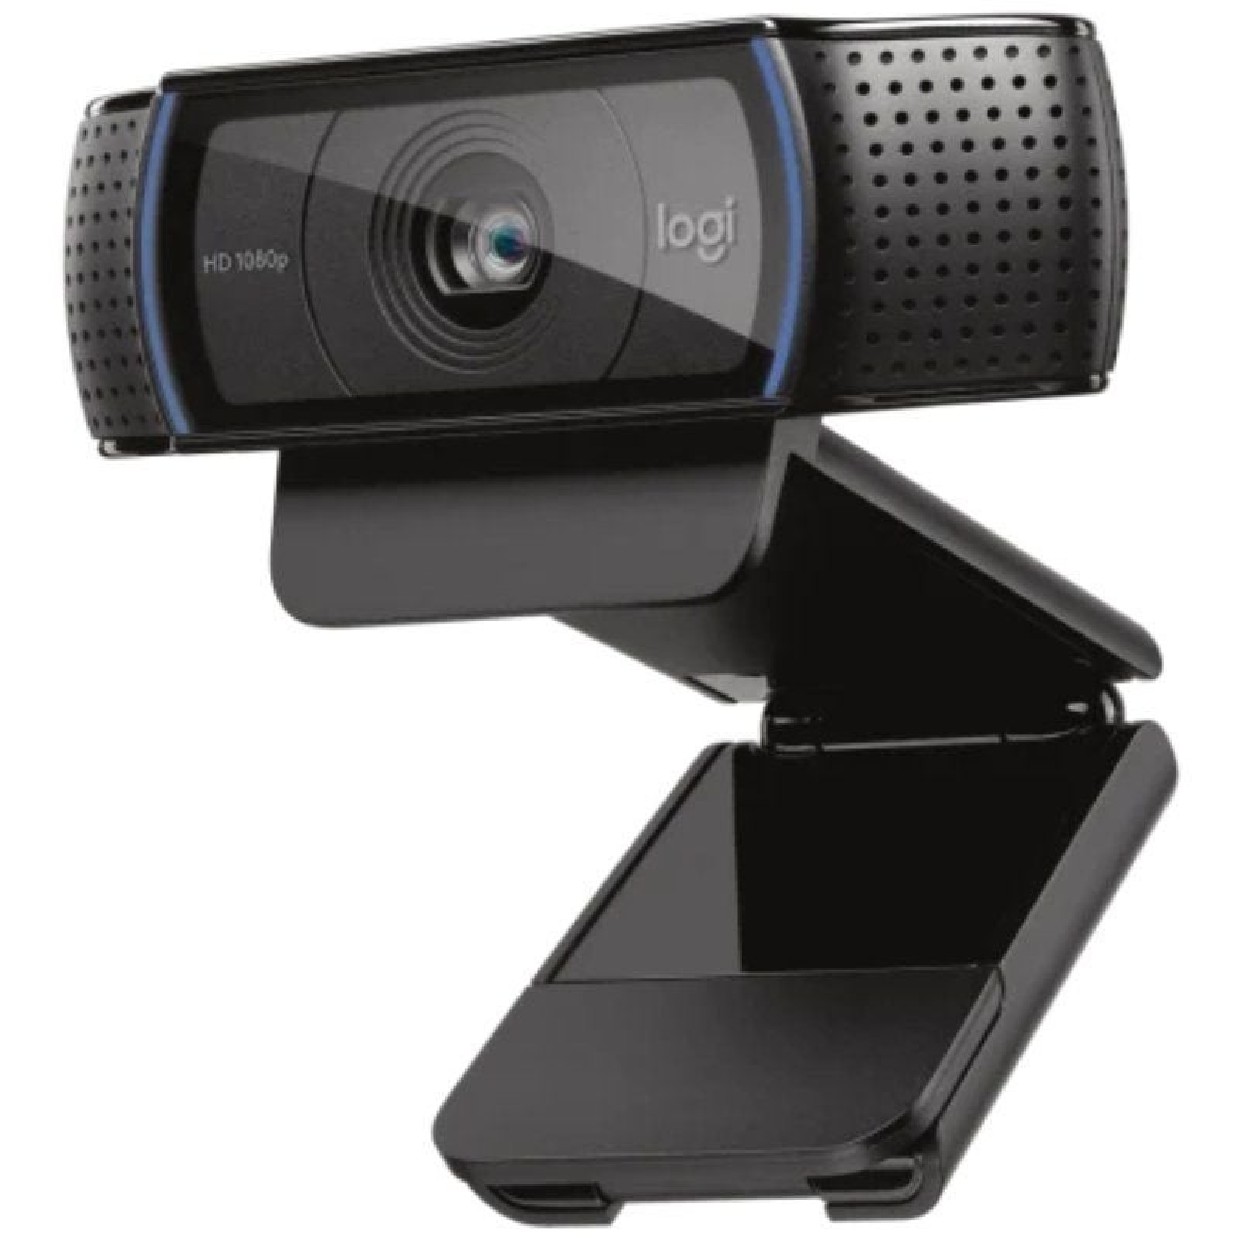 Camaras web - Webcams